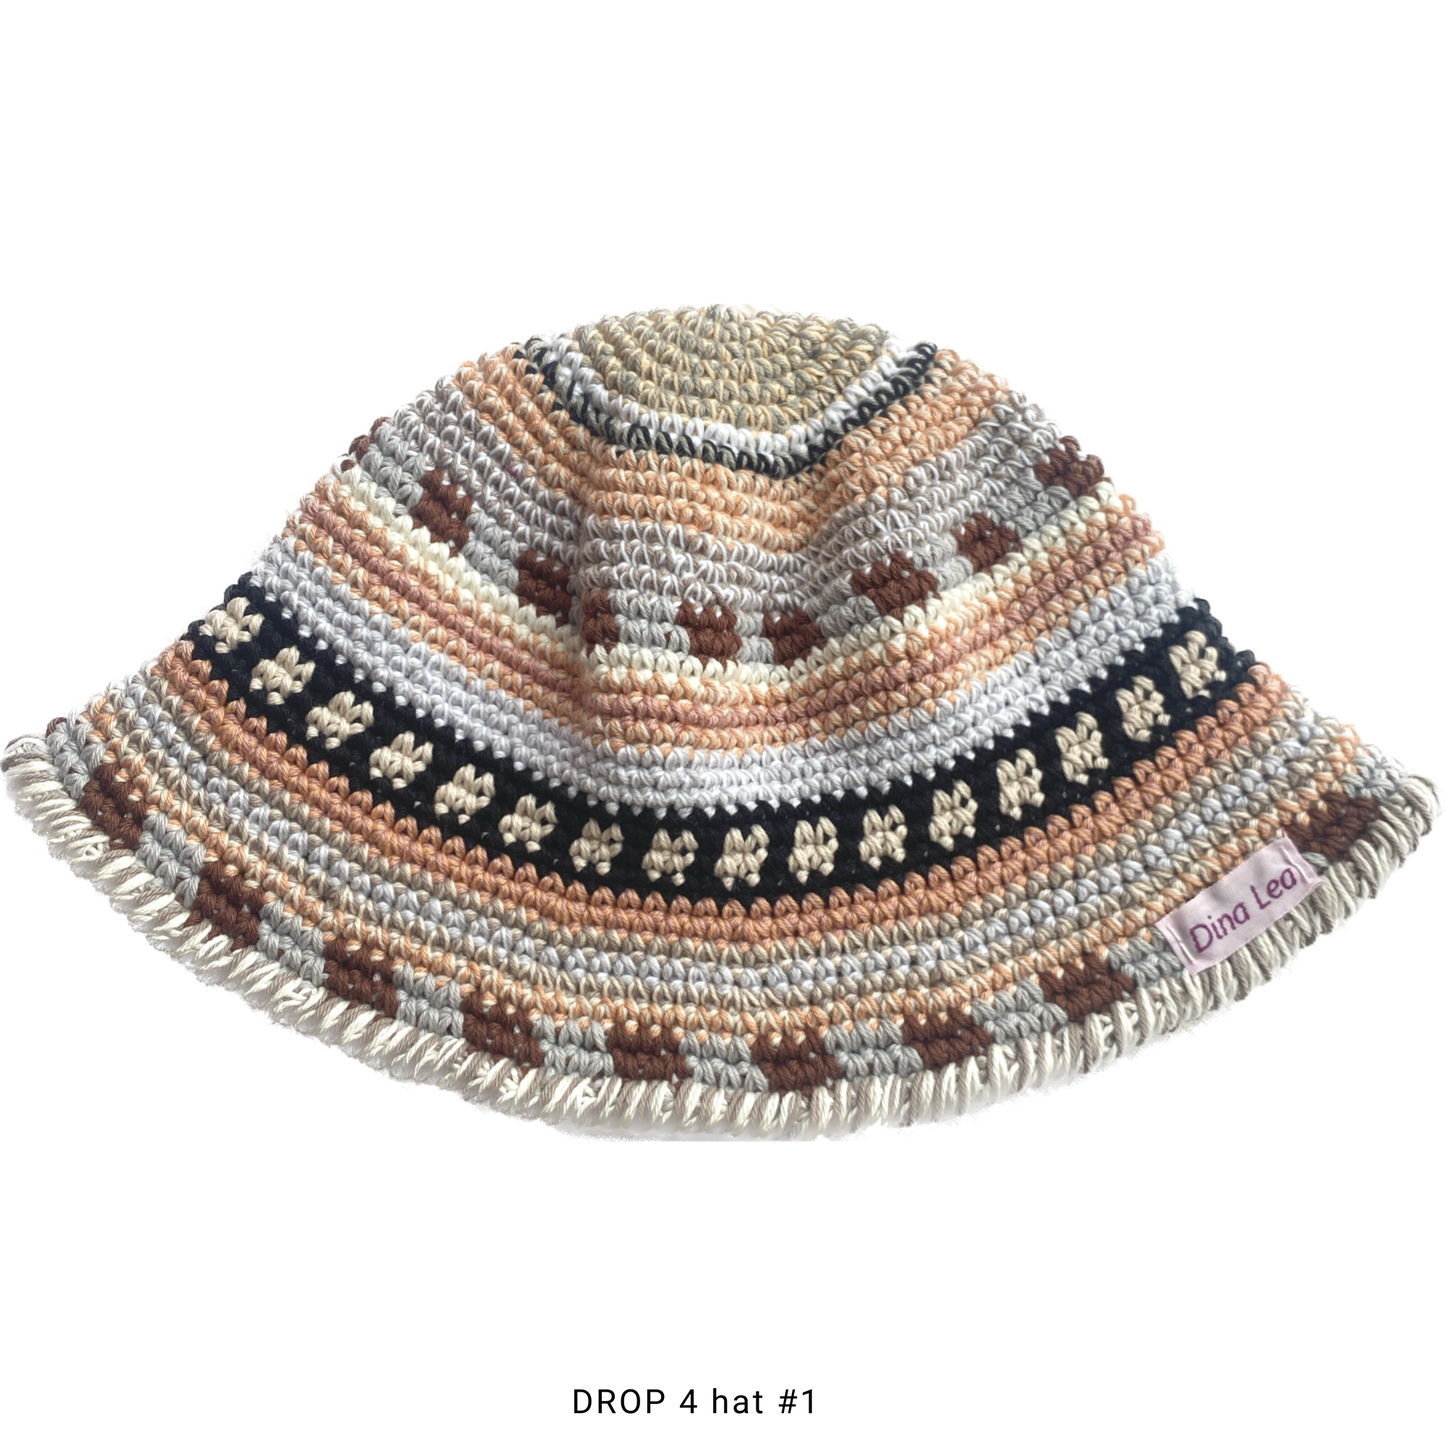 Bucket hat with graphic design crochet pattern